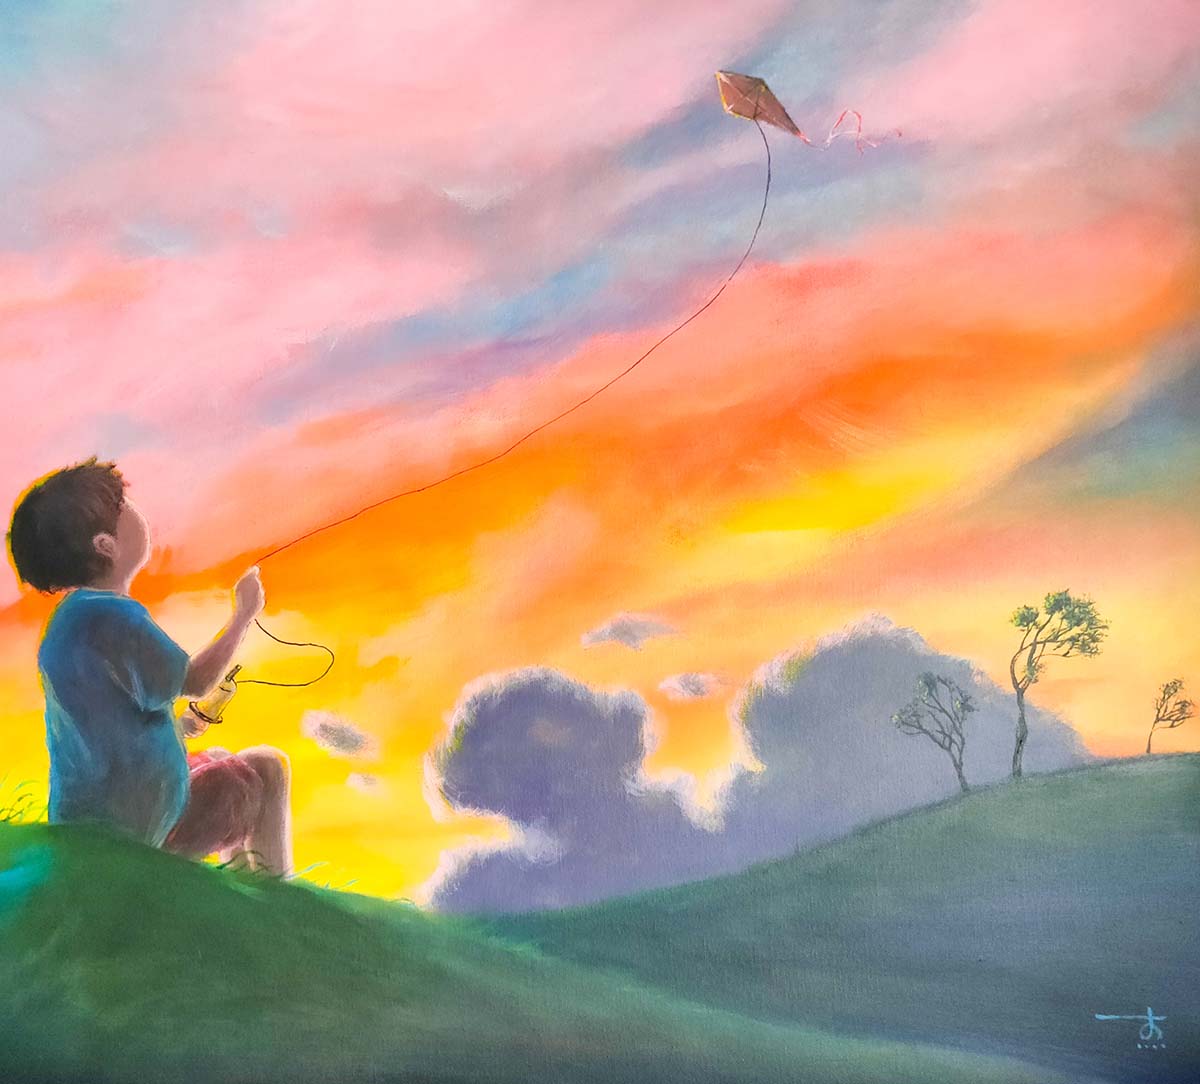 Painting - Dreams take flight.